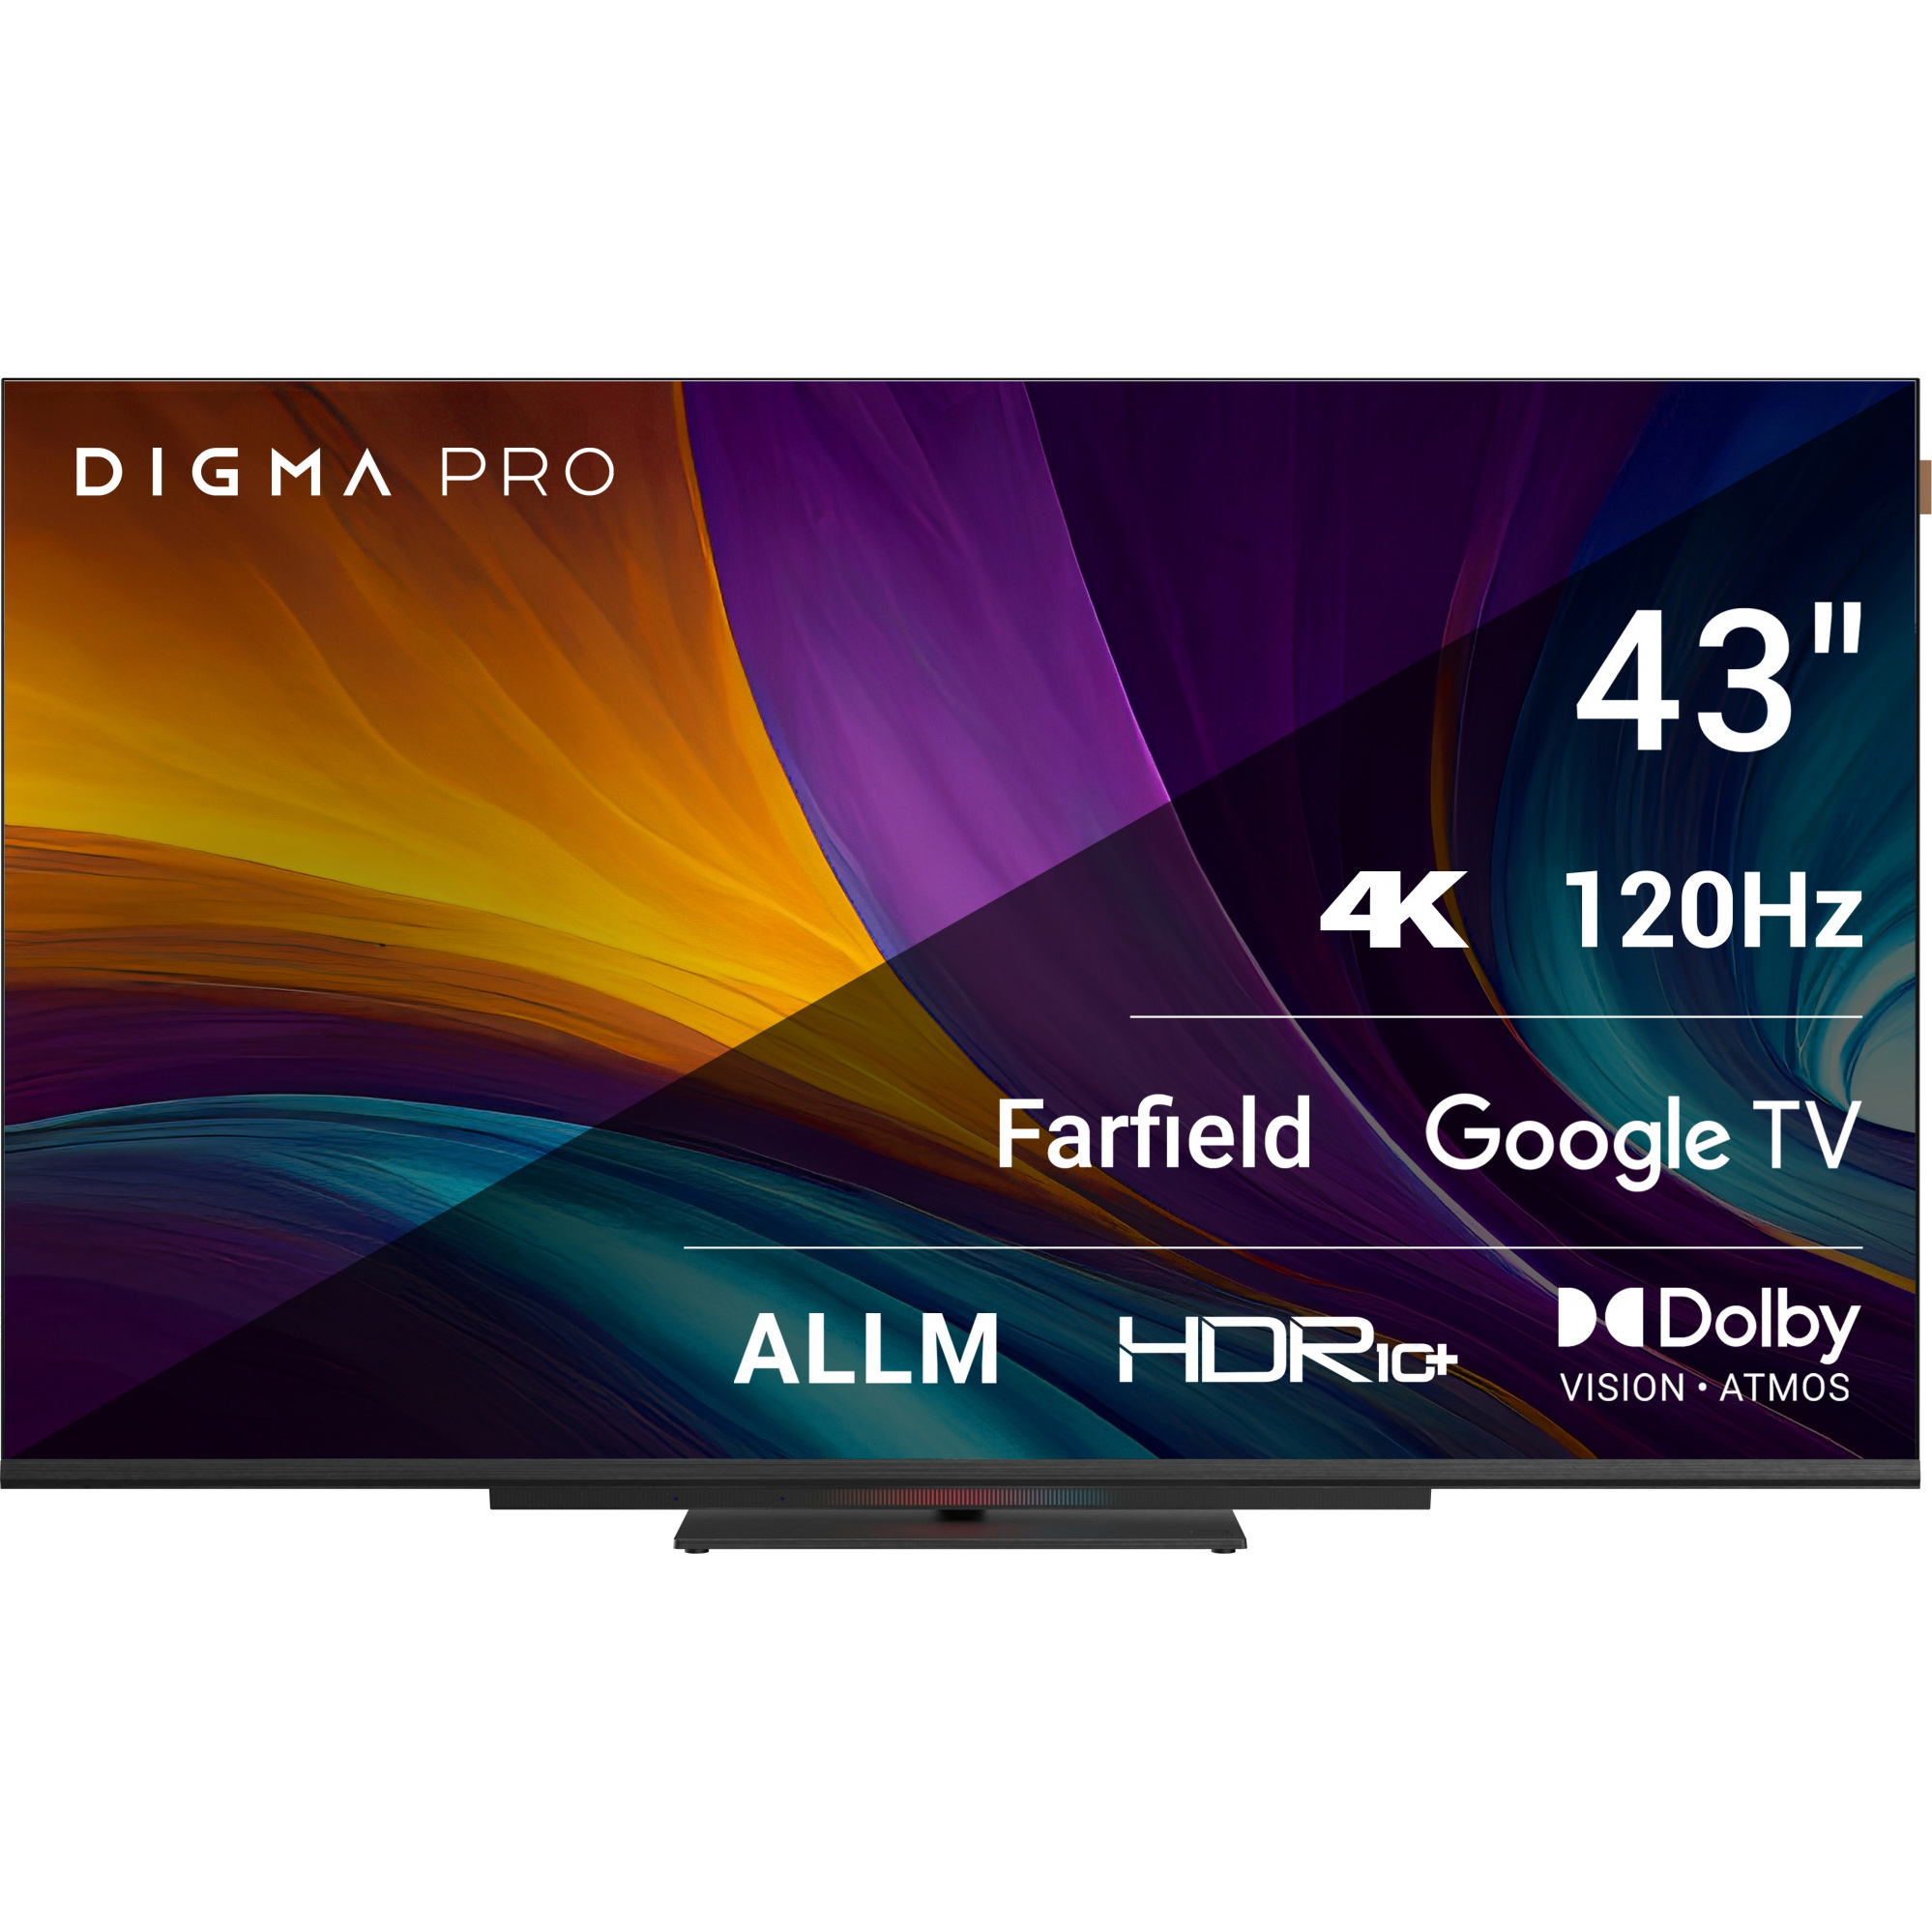 телевизор digma pro 43 43c Телевизор Digma Pro 43 43C